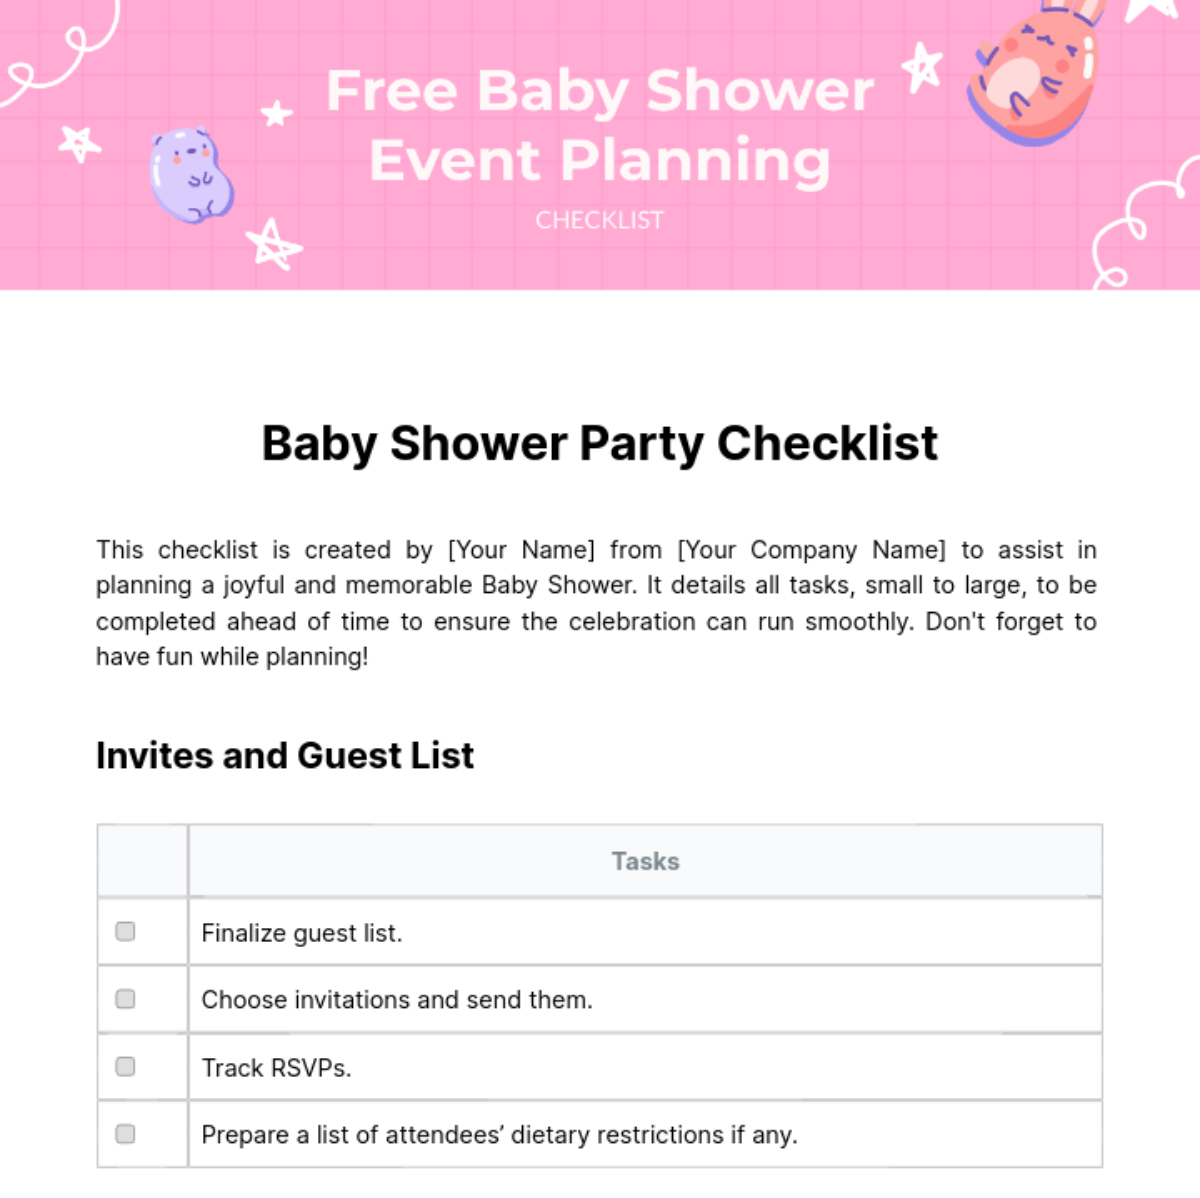 Free Baby Shower Event Planning Checklist Template